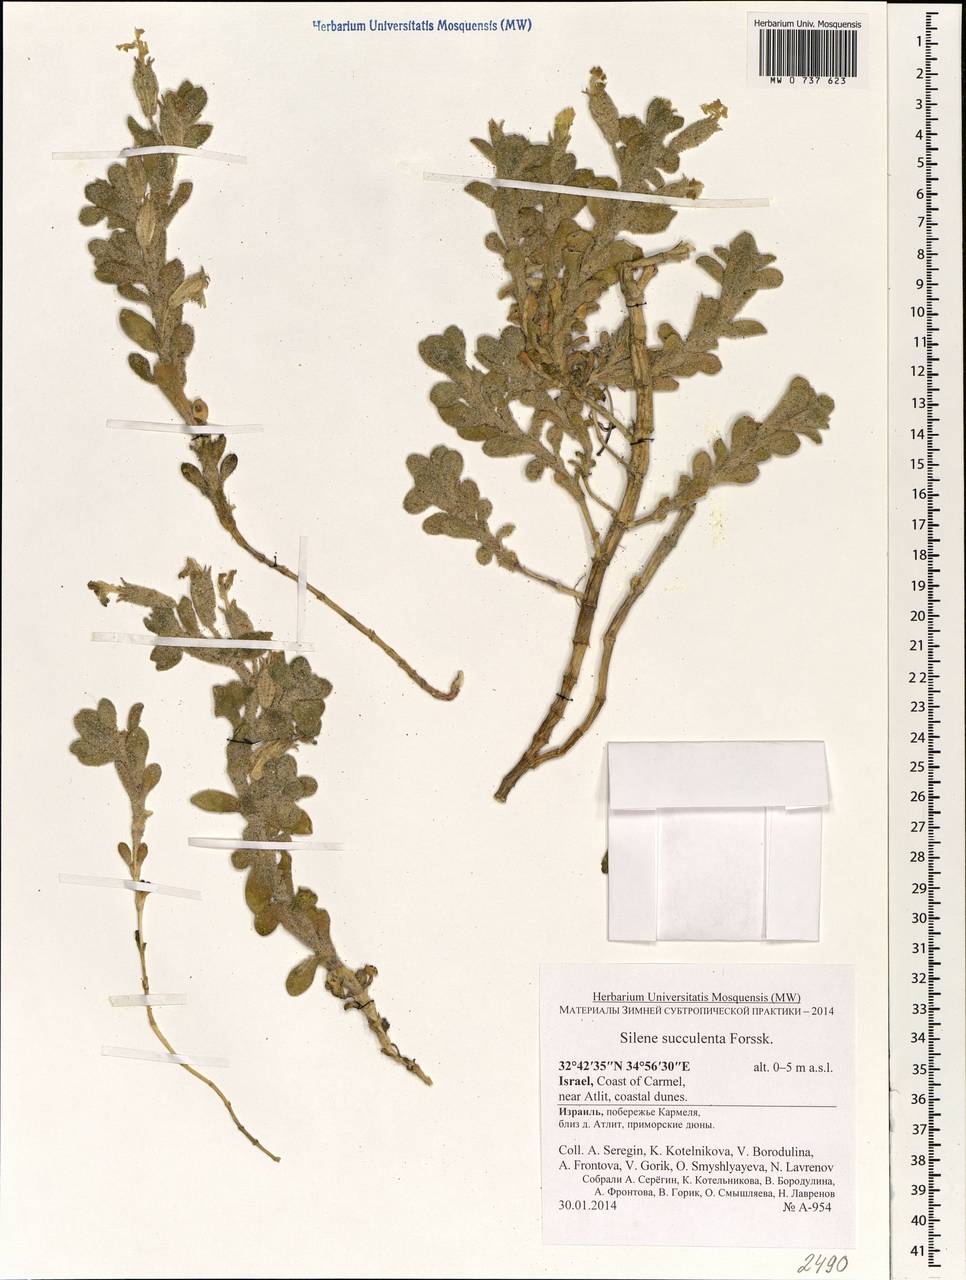 Silene succulenta, South Asia, South Asia (Asia outside ex-Soviet states and Mongolia) (ASIA) (Israel)